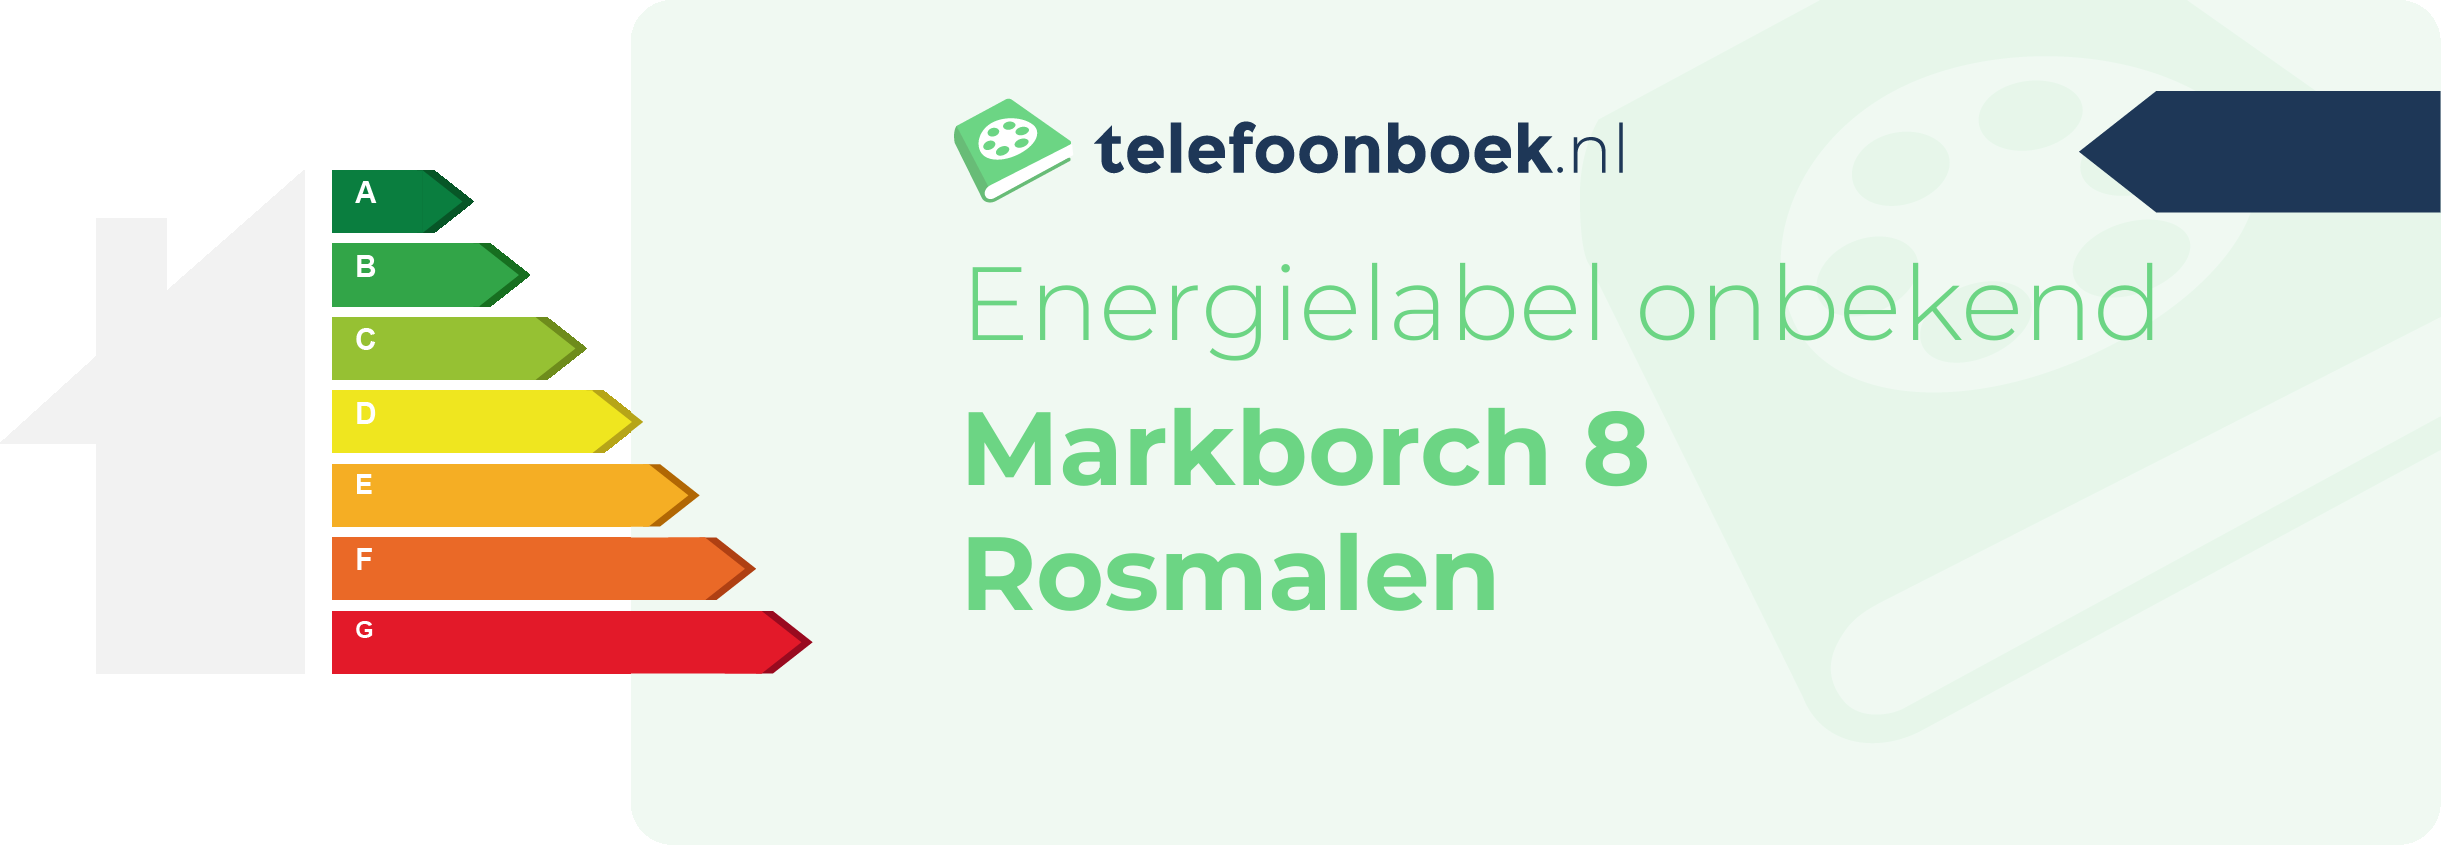 Energielabel Markborch 8 Rosmalen